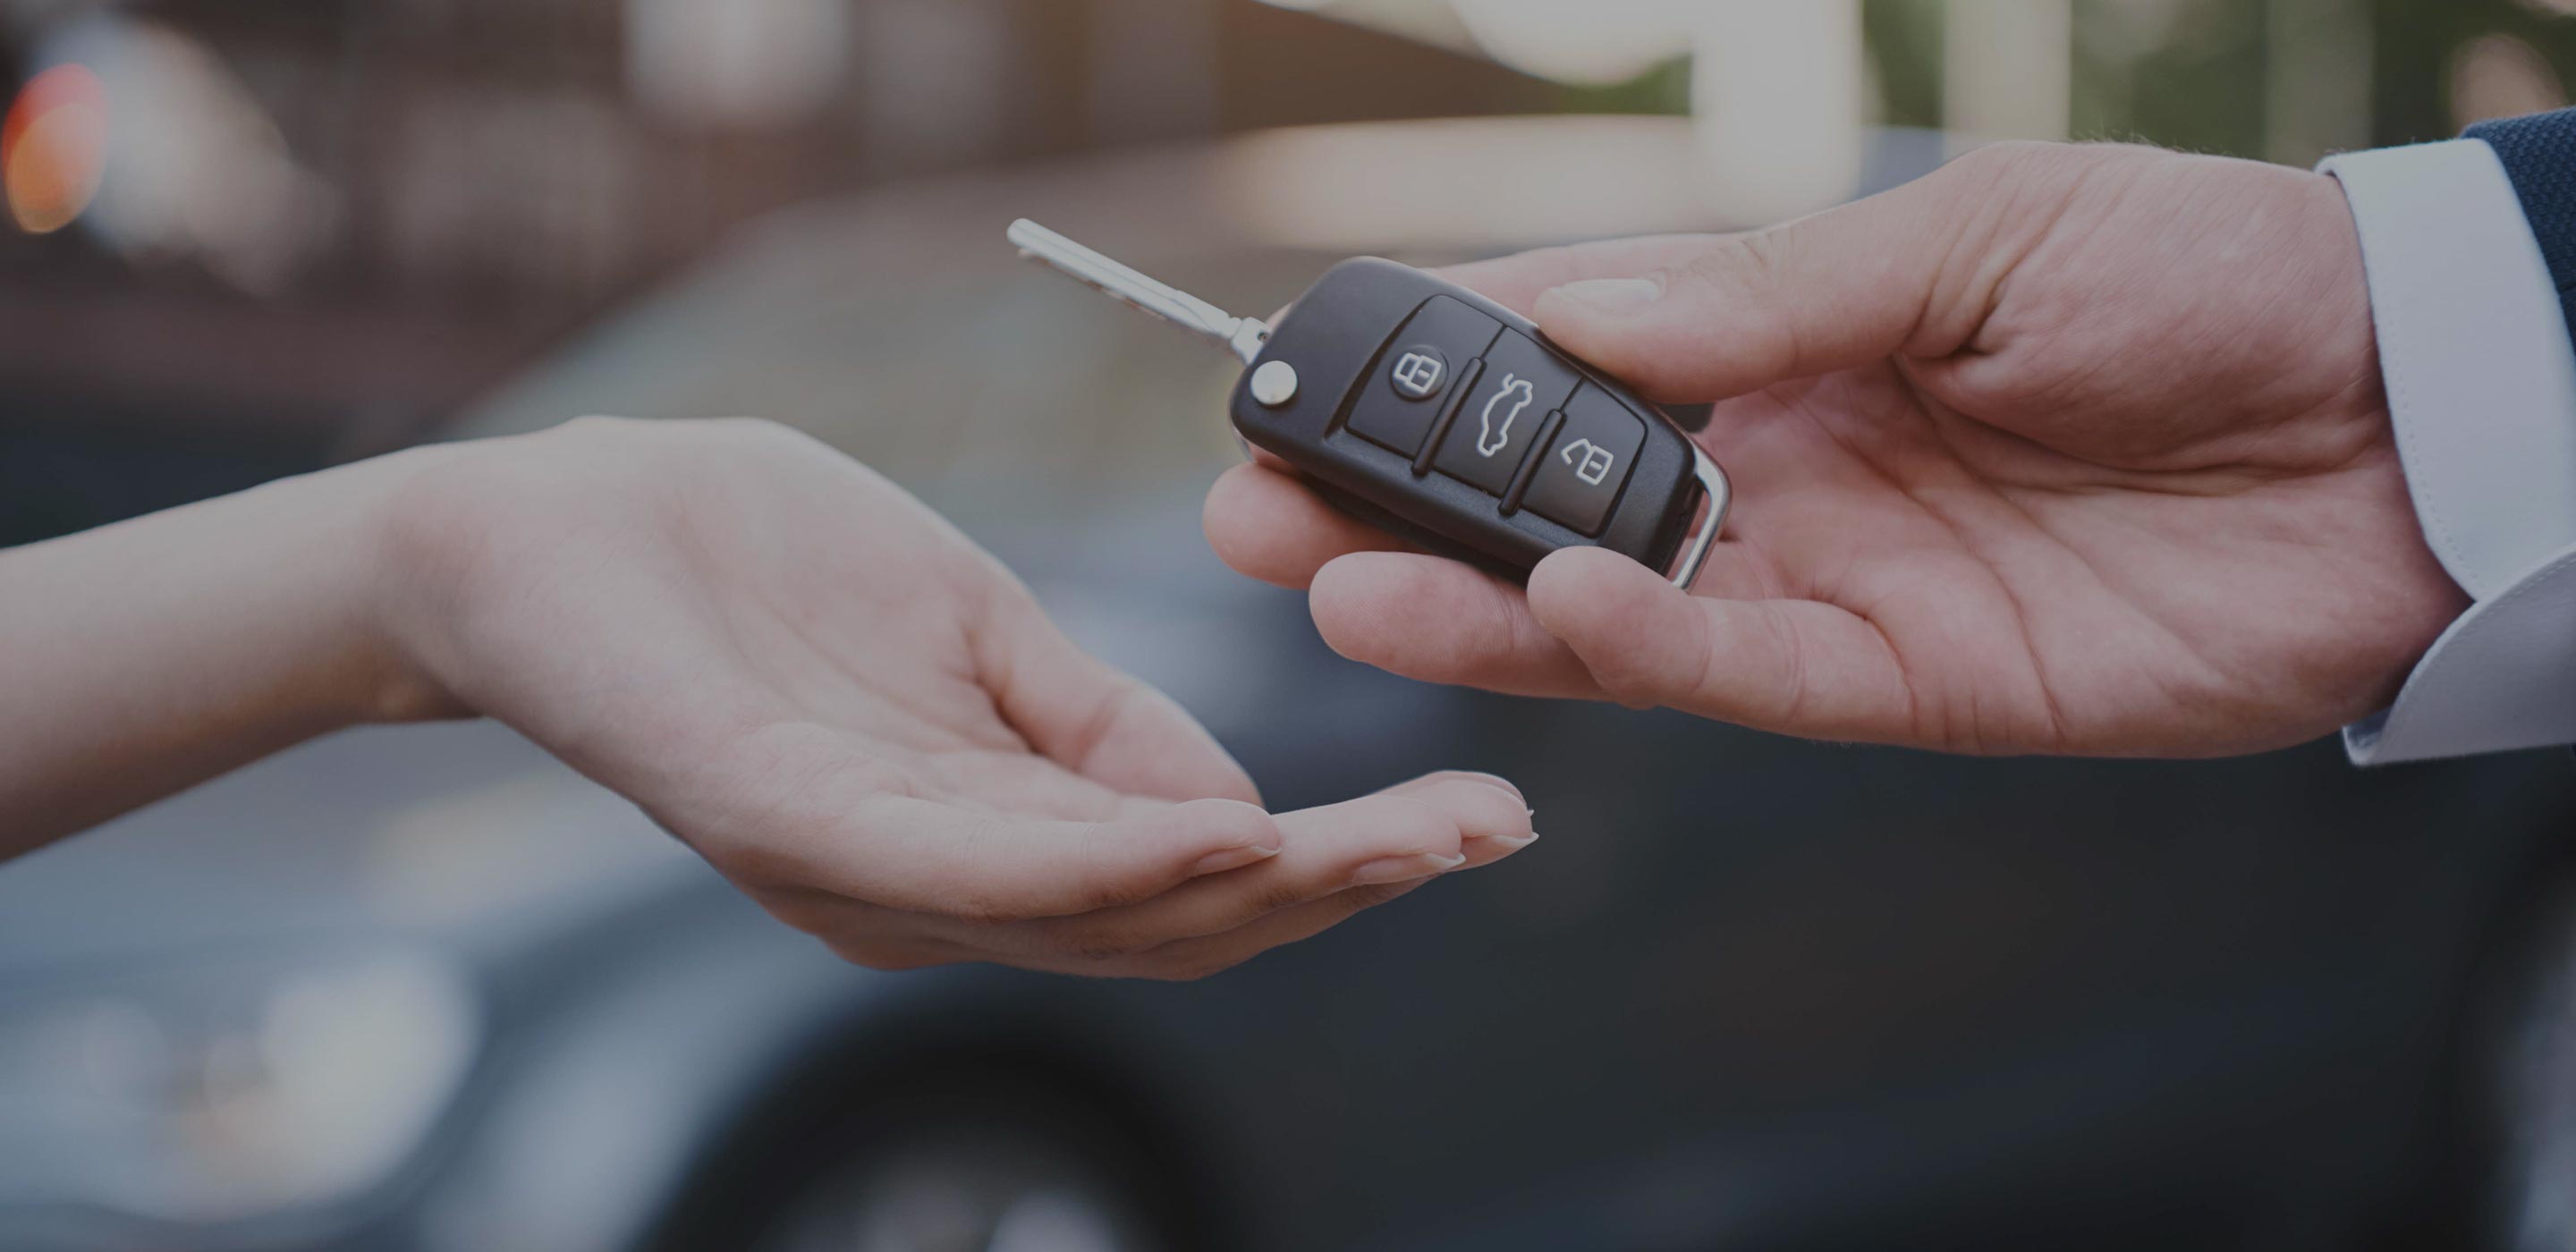 Handing over rental car keys